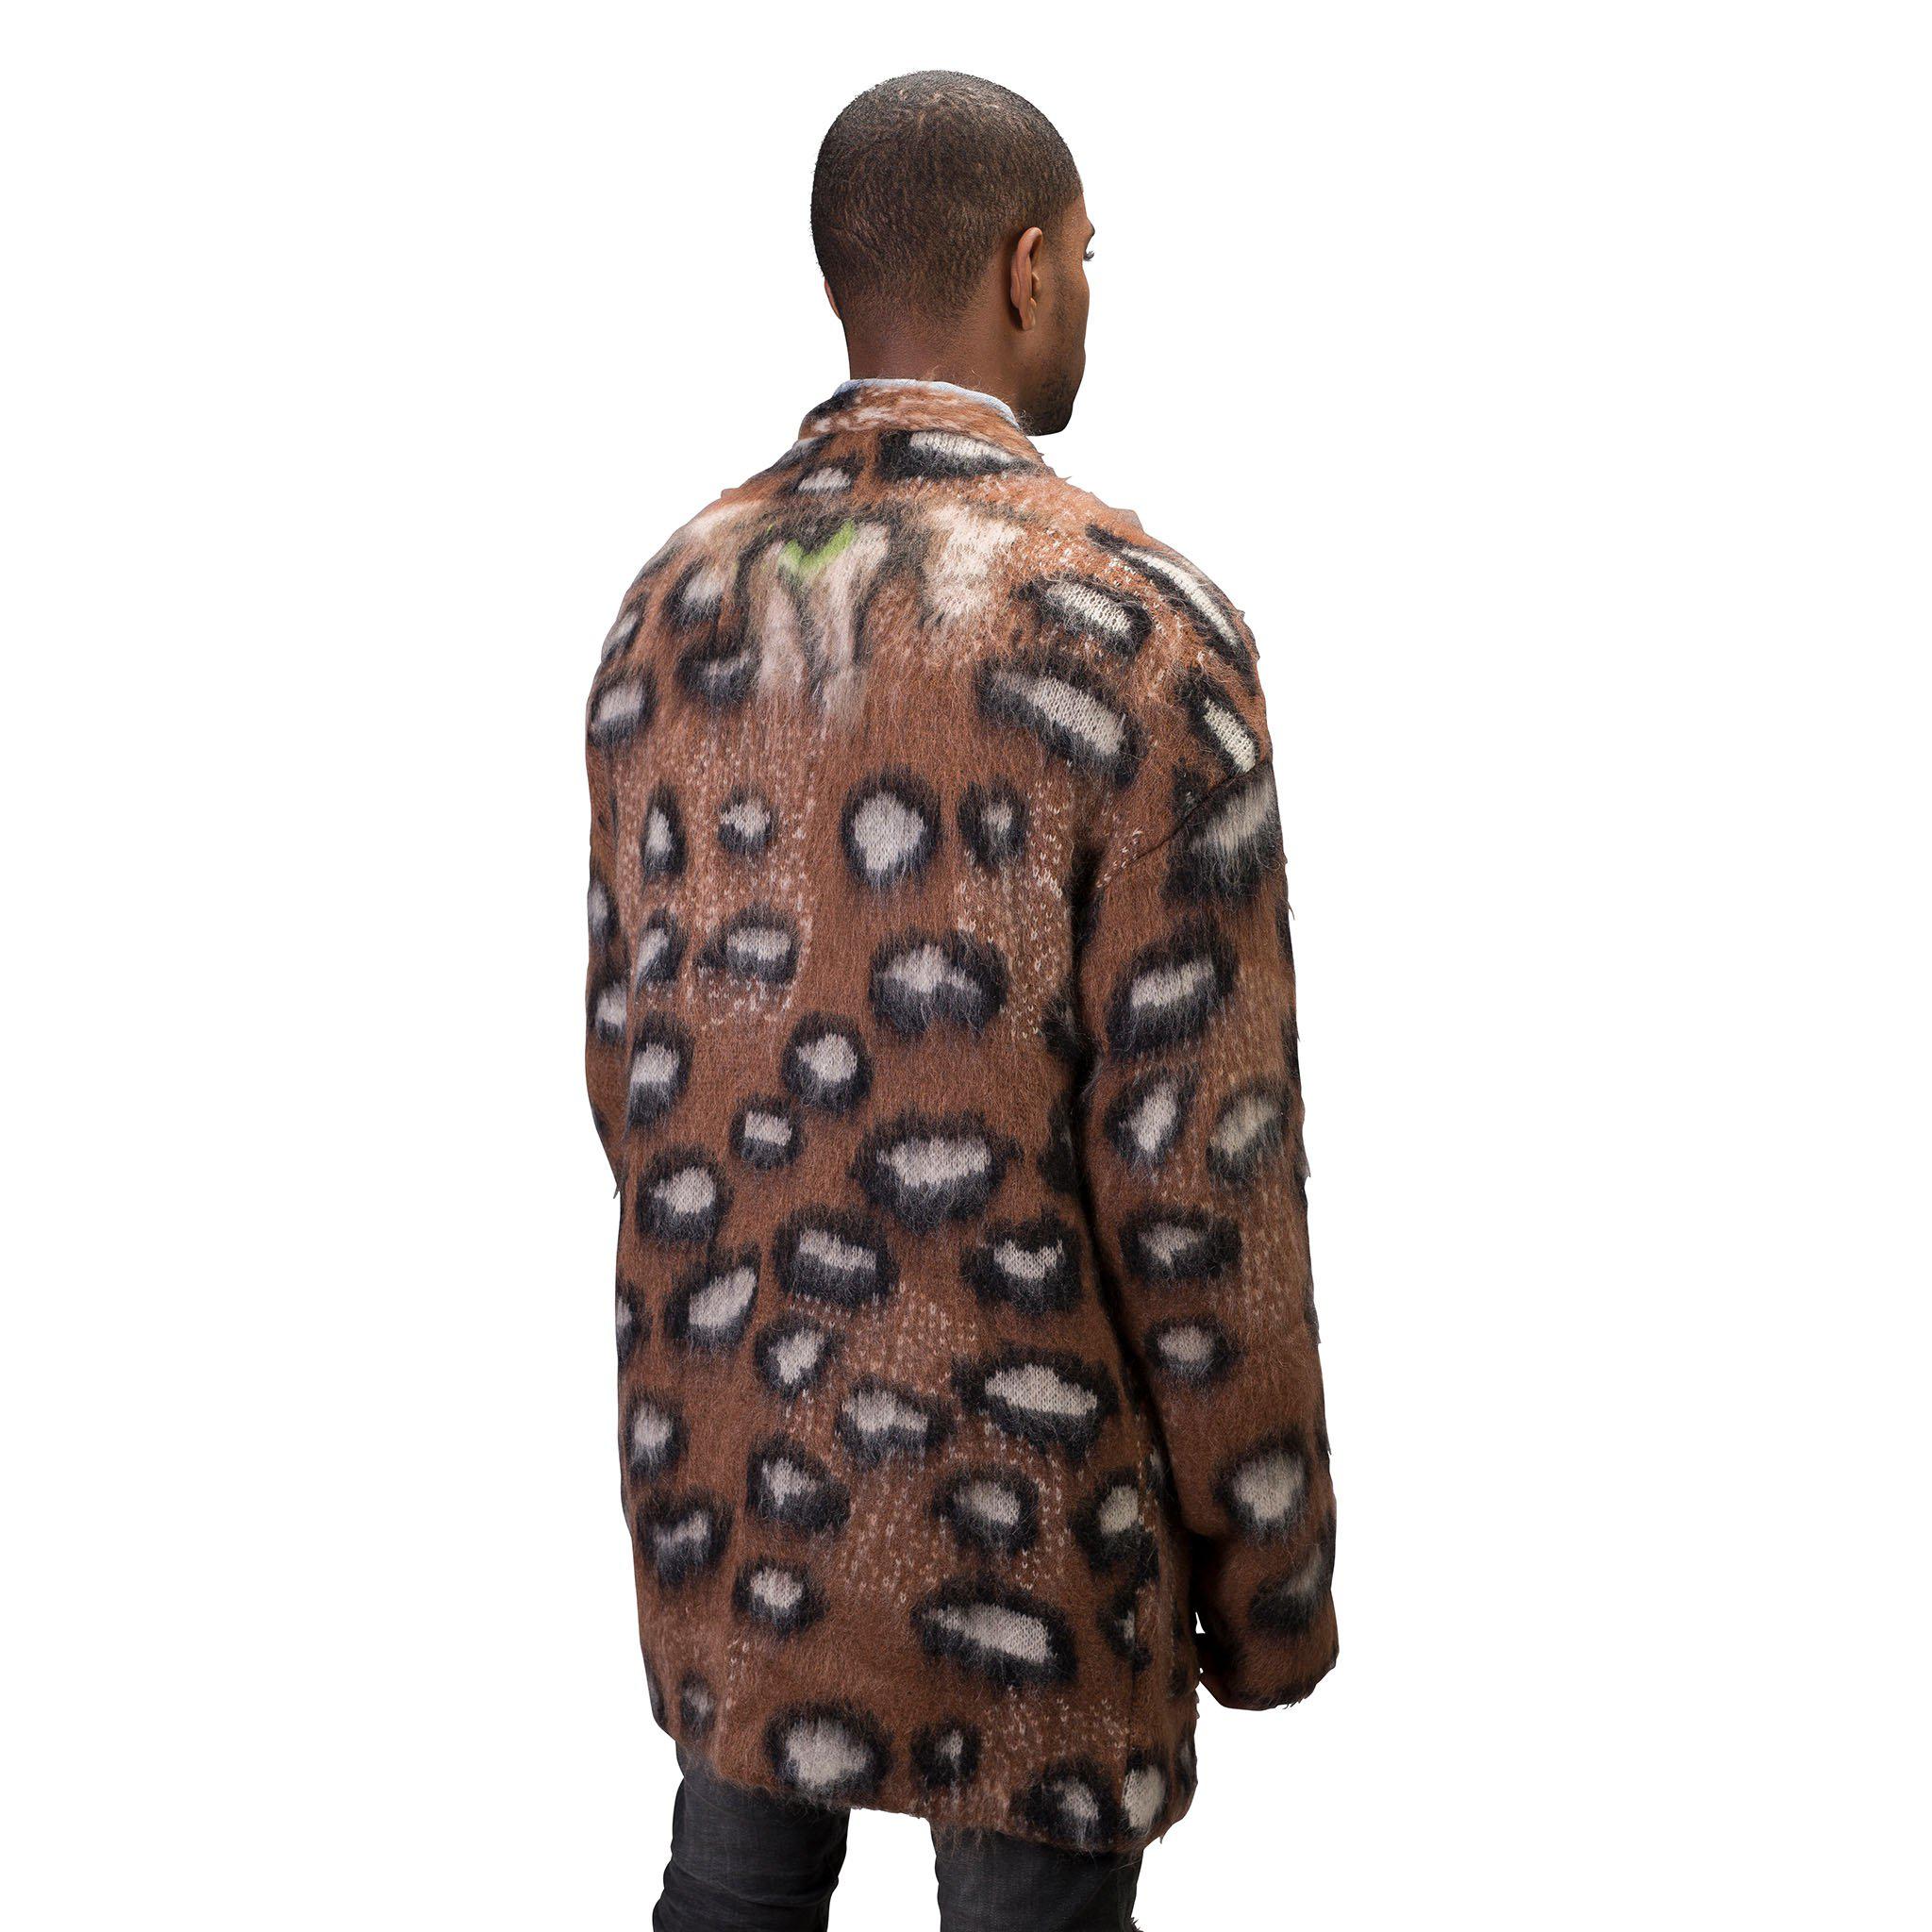 Off-White c/o Virgil Abloh Wool Leopard Cardigan in Brown for Men - Lyst